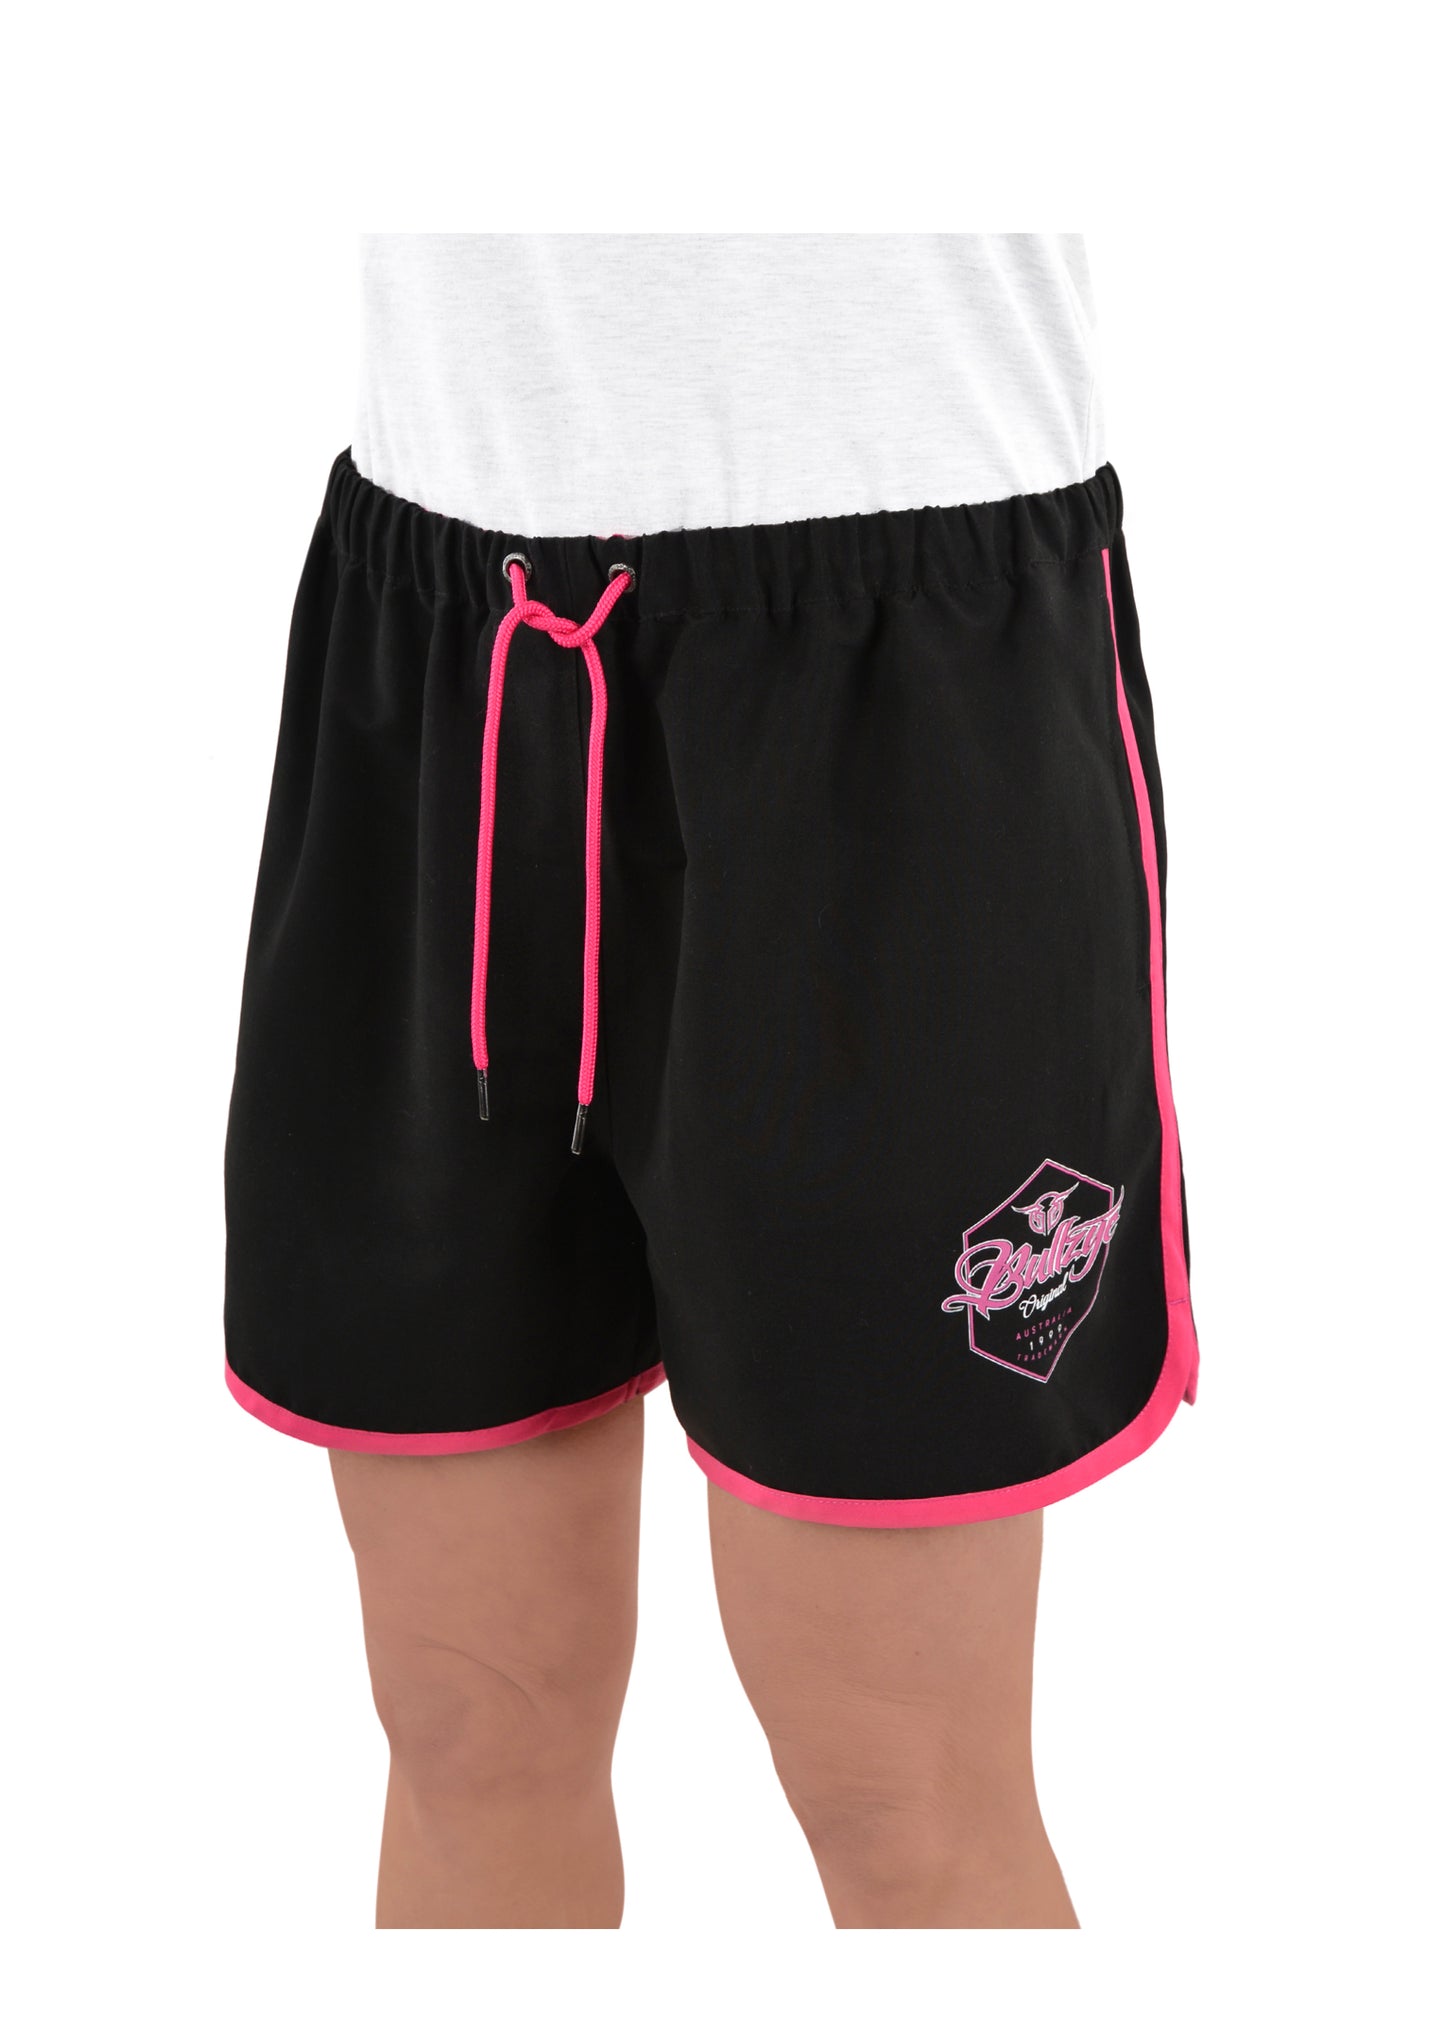 Bullzye Ladies Classic Boardshort - Black/Pink - B1S2301097